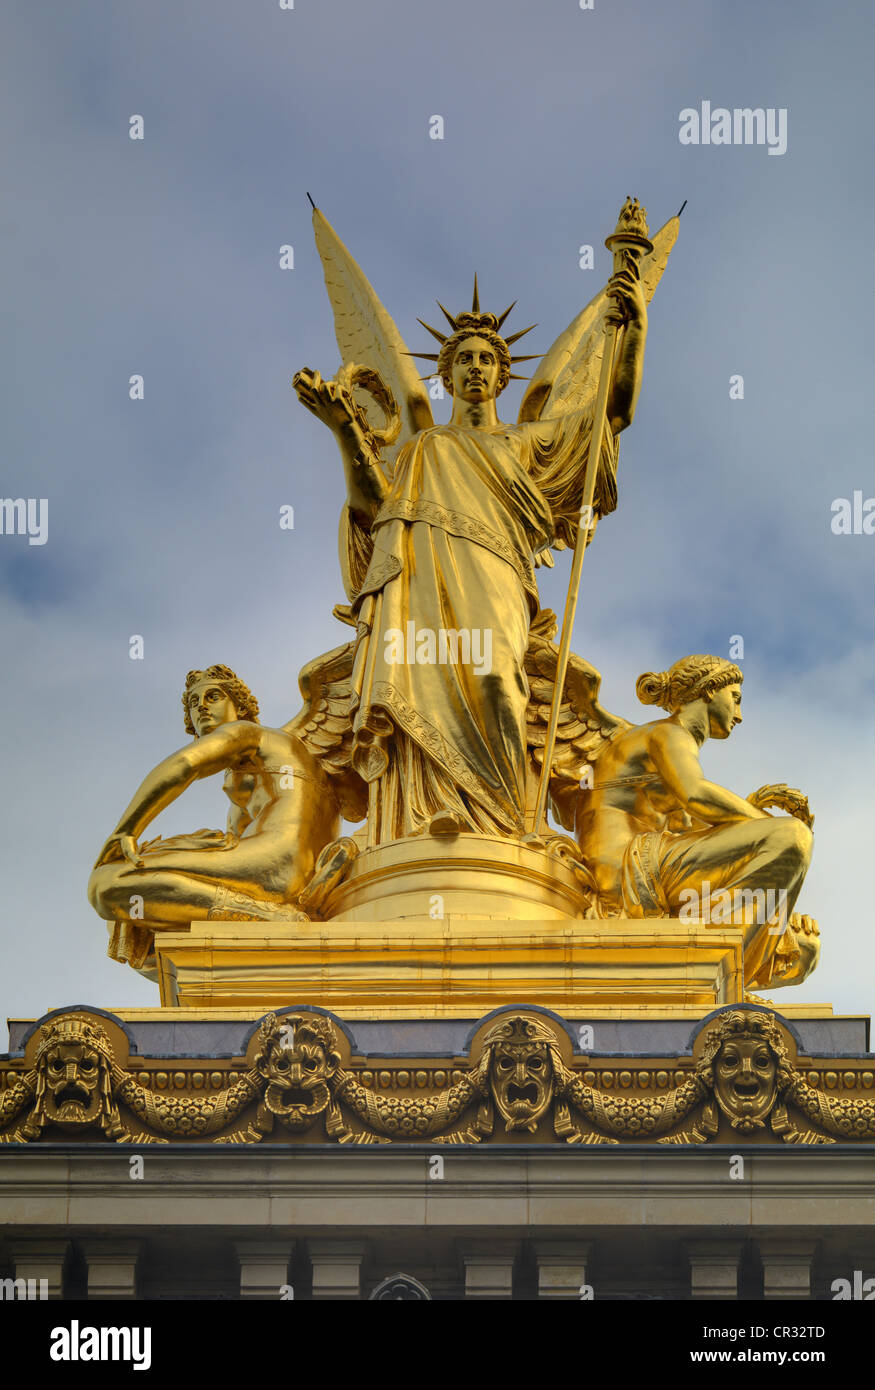 France Paris Opera House Statue Detail Top Building Stock Photo